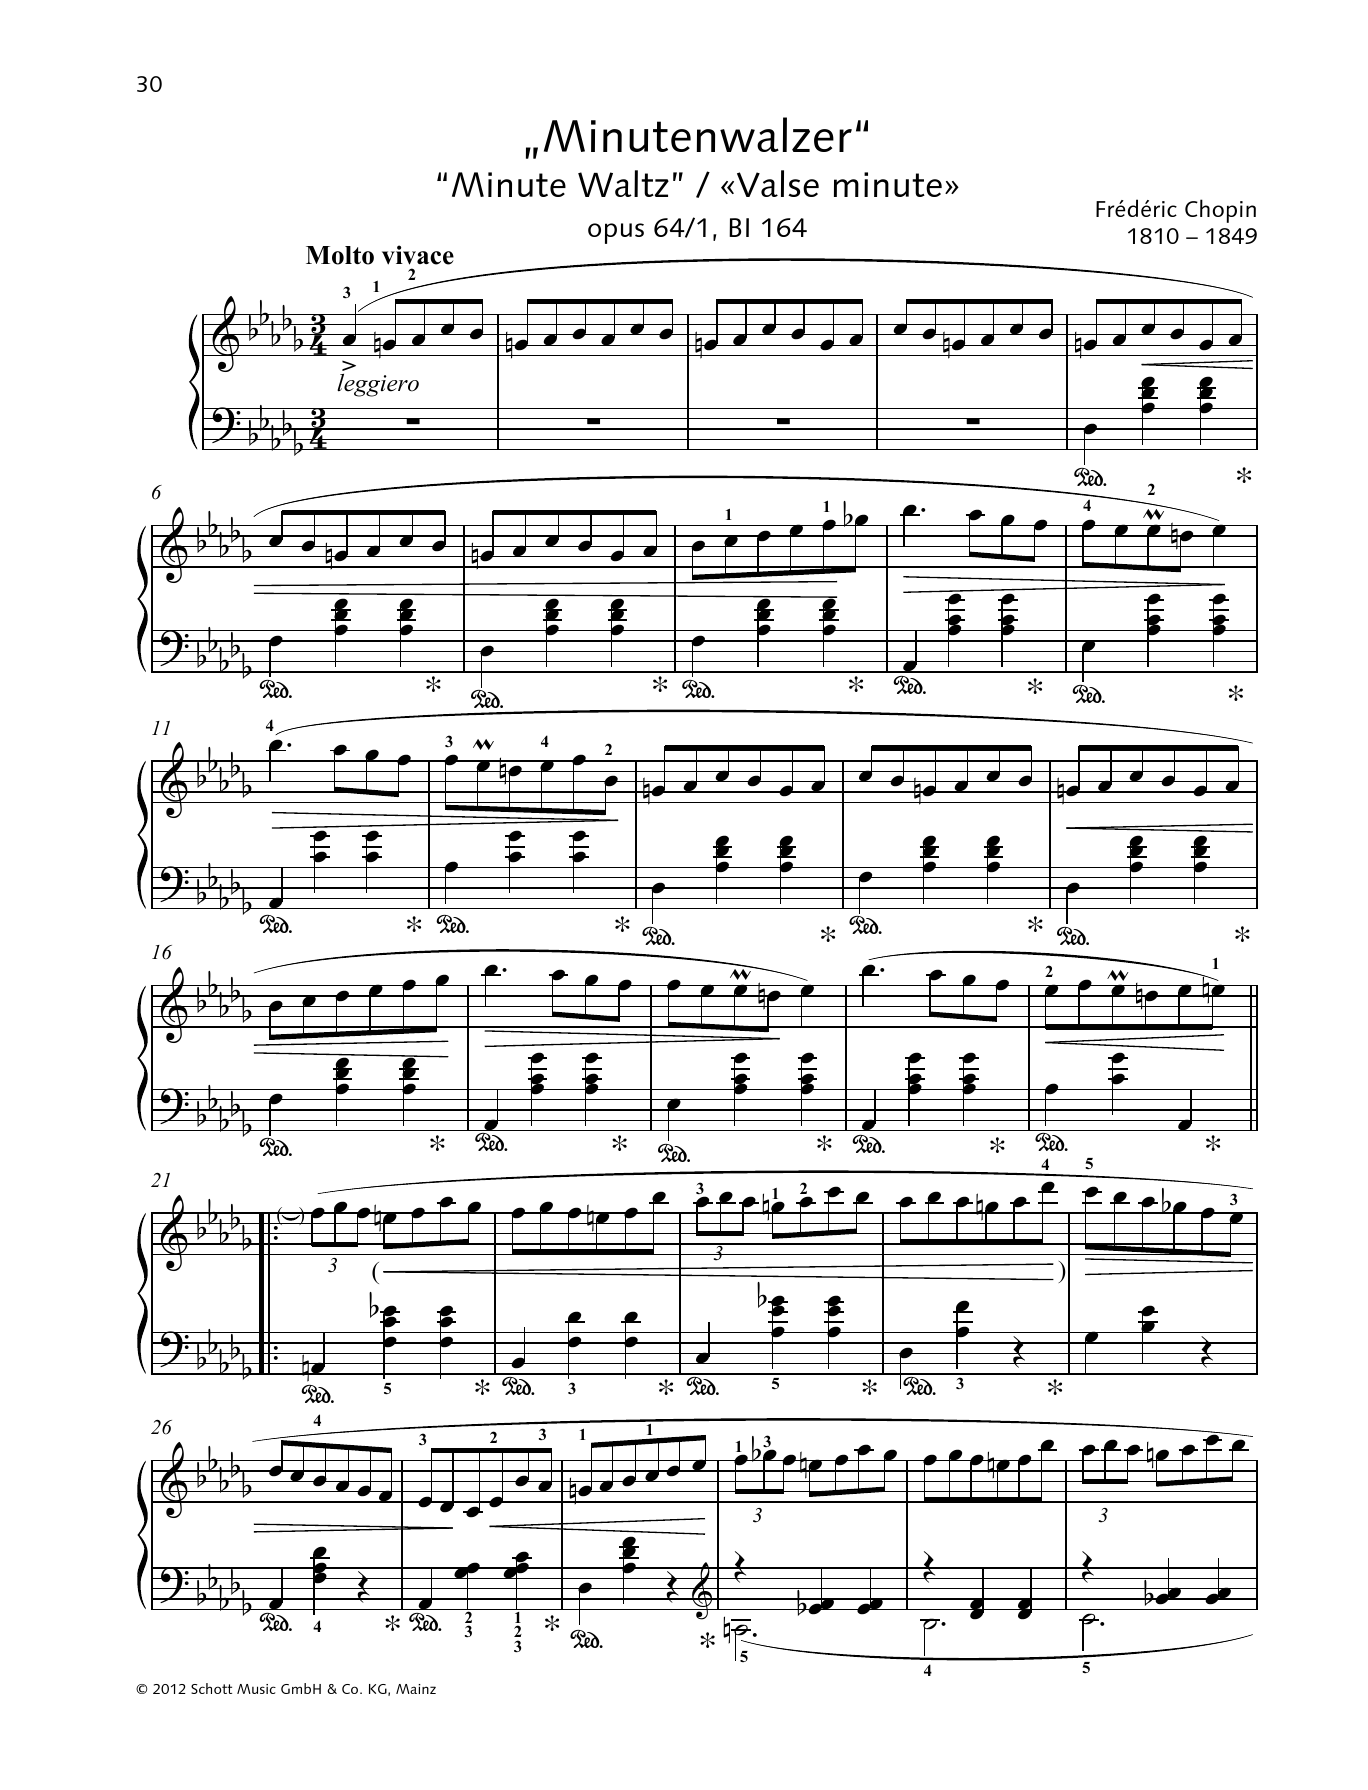 Download Frederic Chopin Minute Waltz Sheet Music